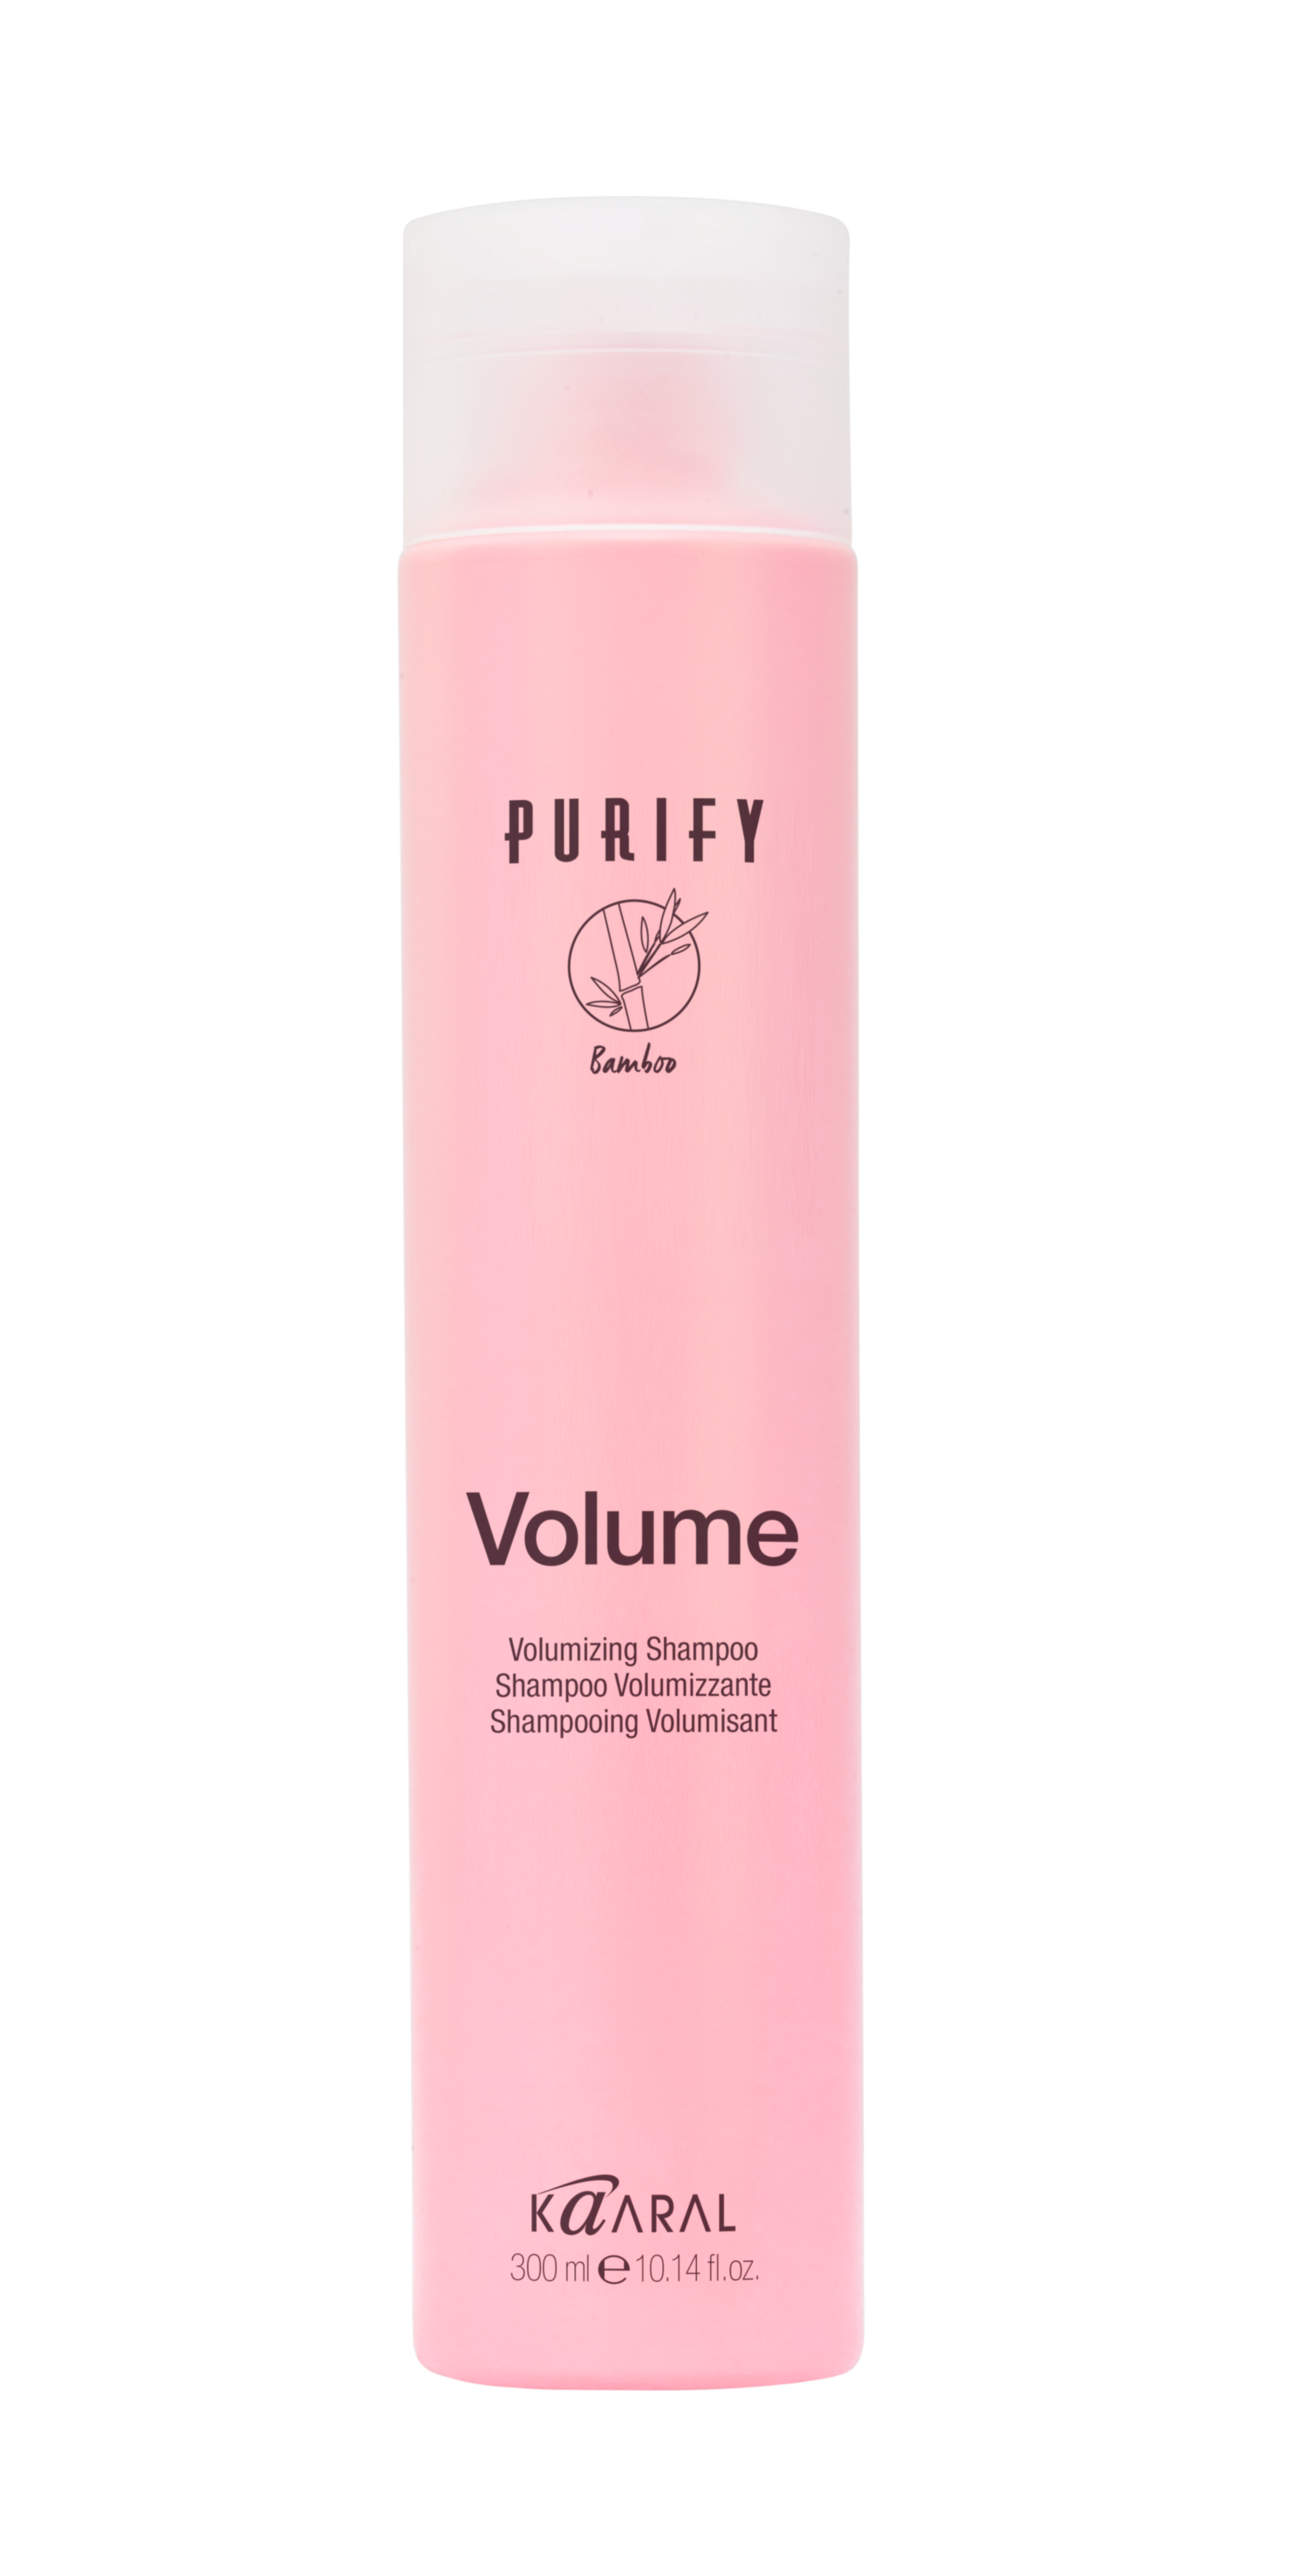 PURIFY Volume Shampoo by KAARAL